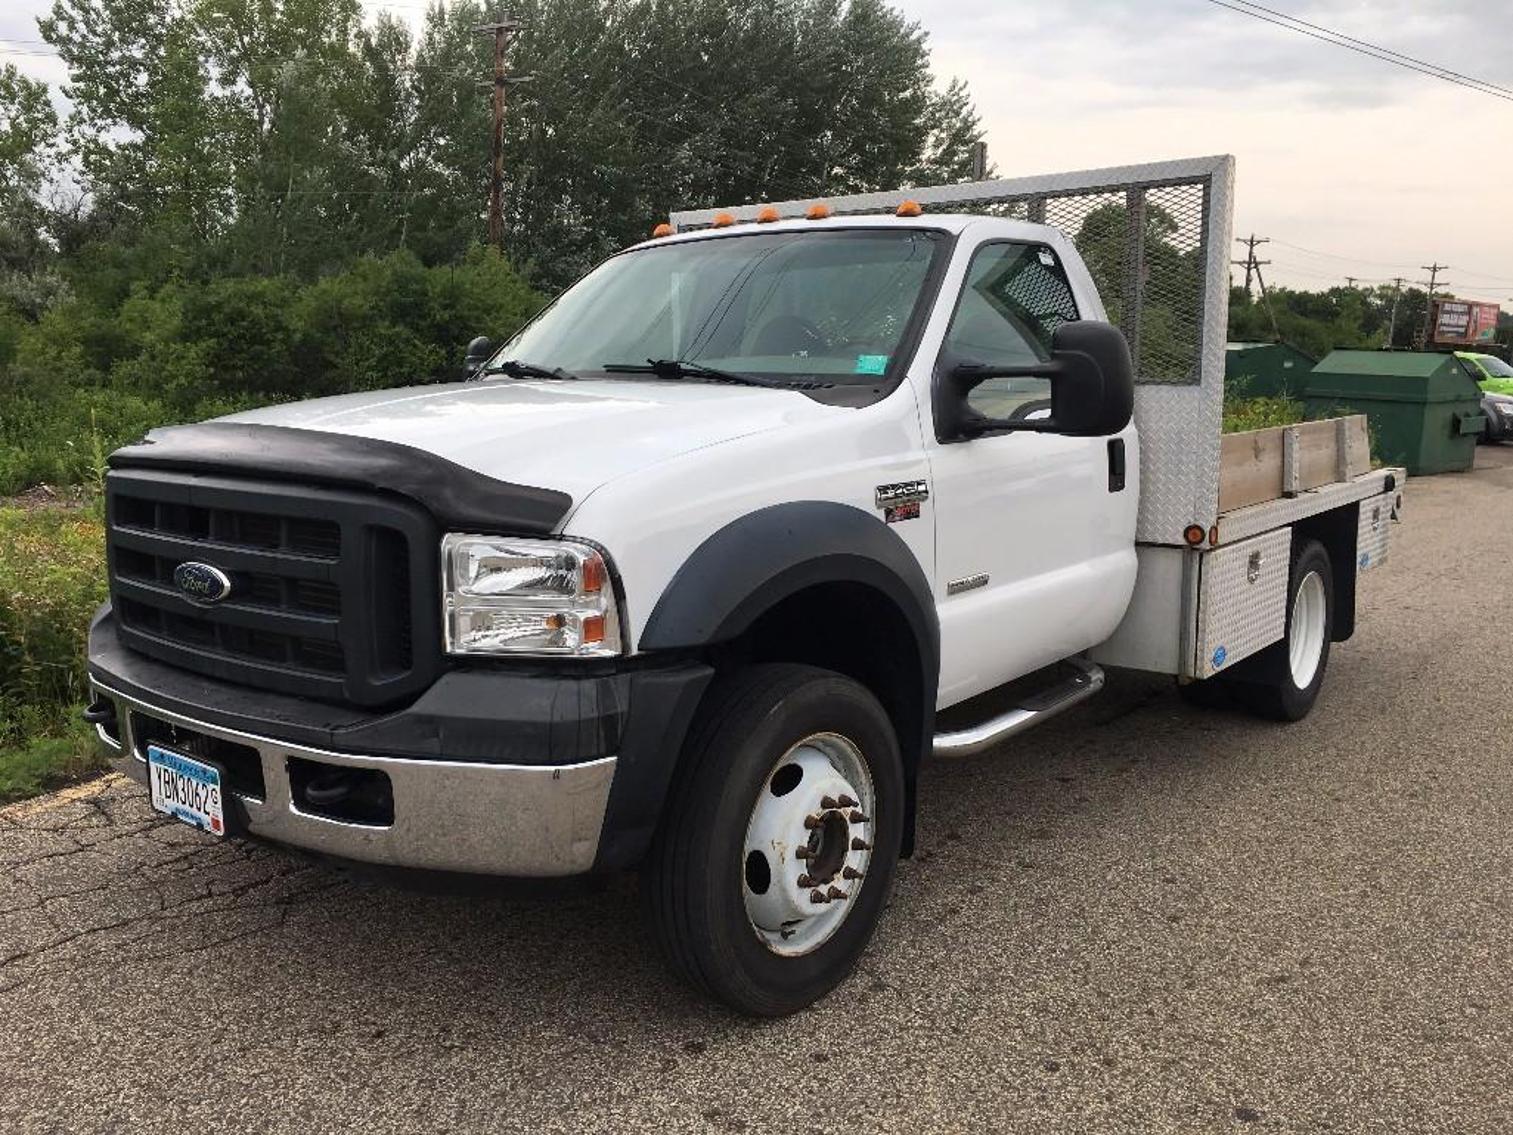 Boyer Truck & Equipment July Auction